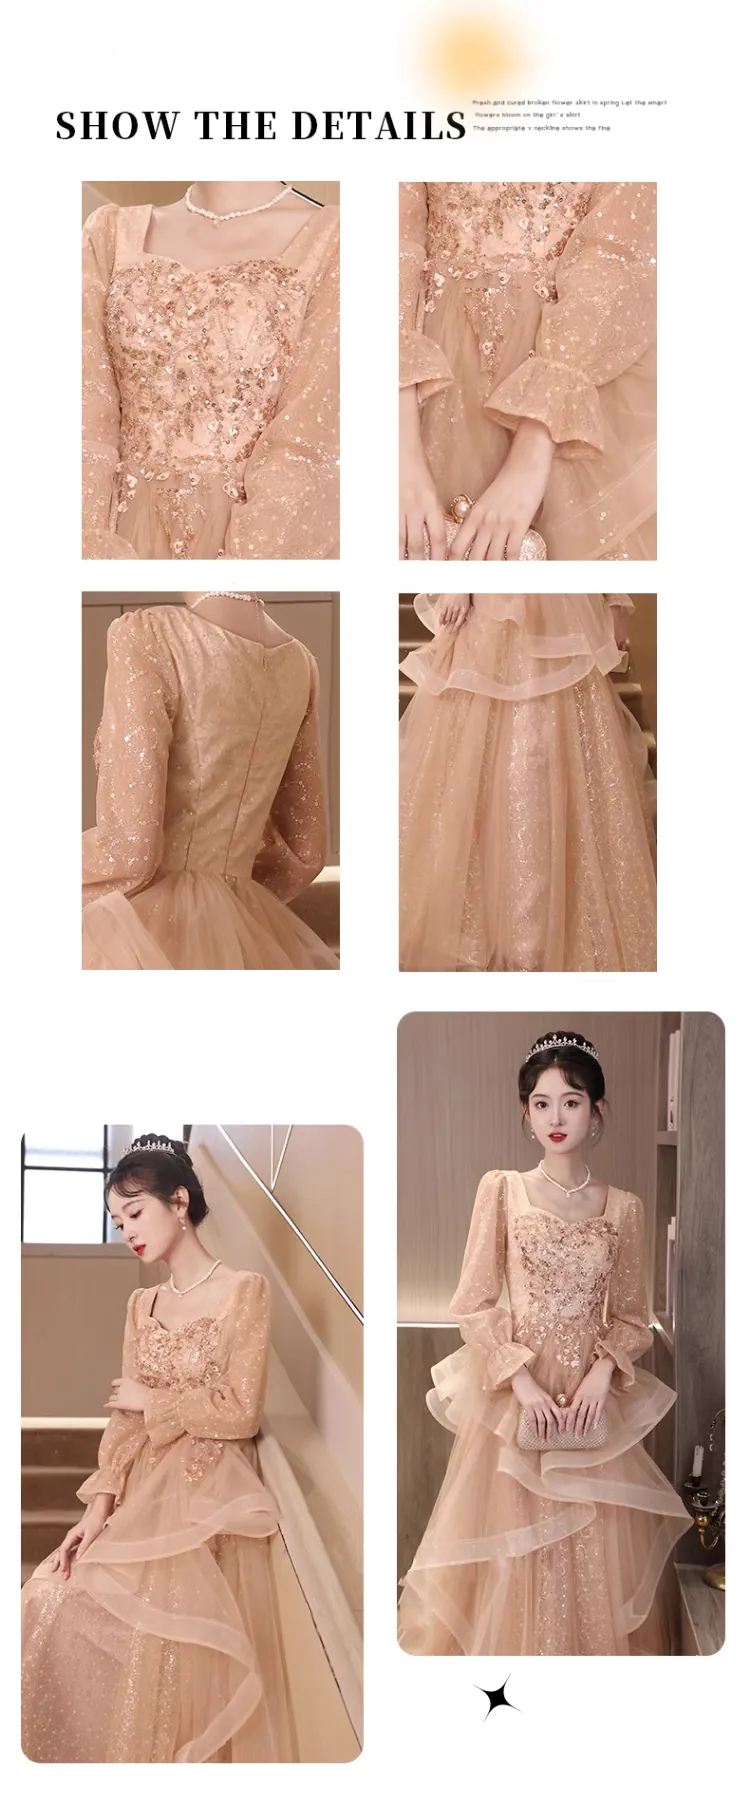 Classy-Elegant-Khaki-Long-Sleeve-Formal-Party-Dress-Aesthetic-Ball-Gown09